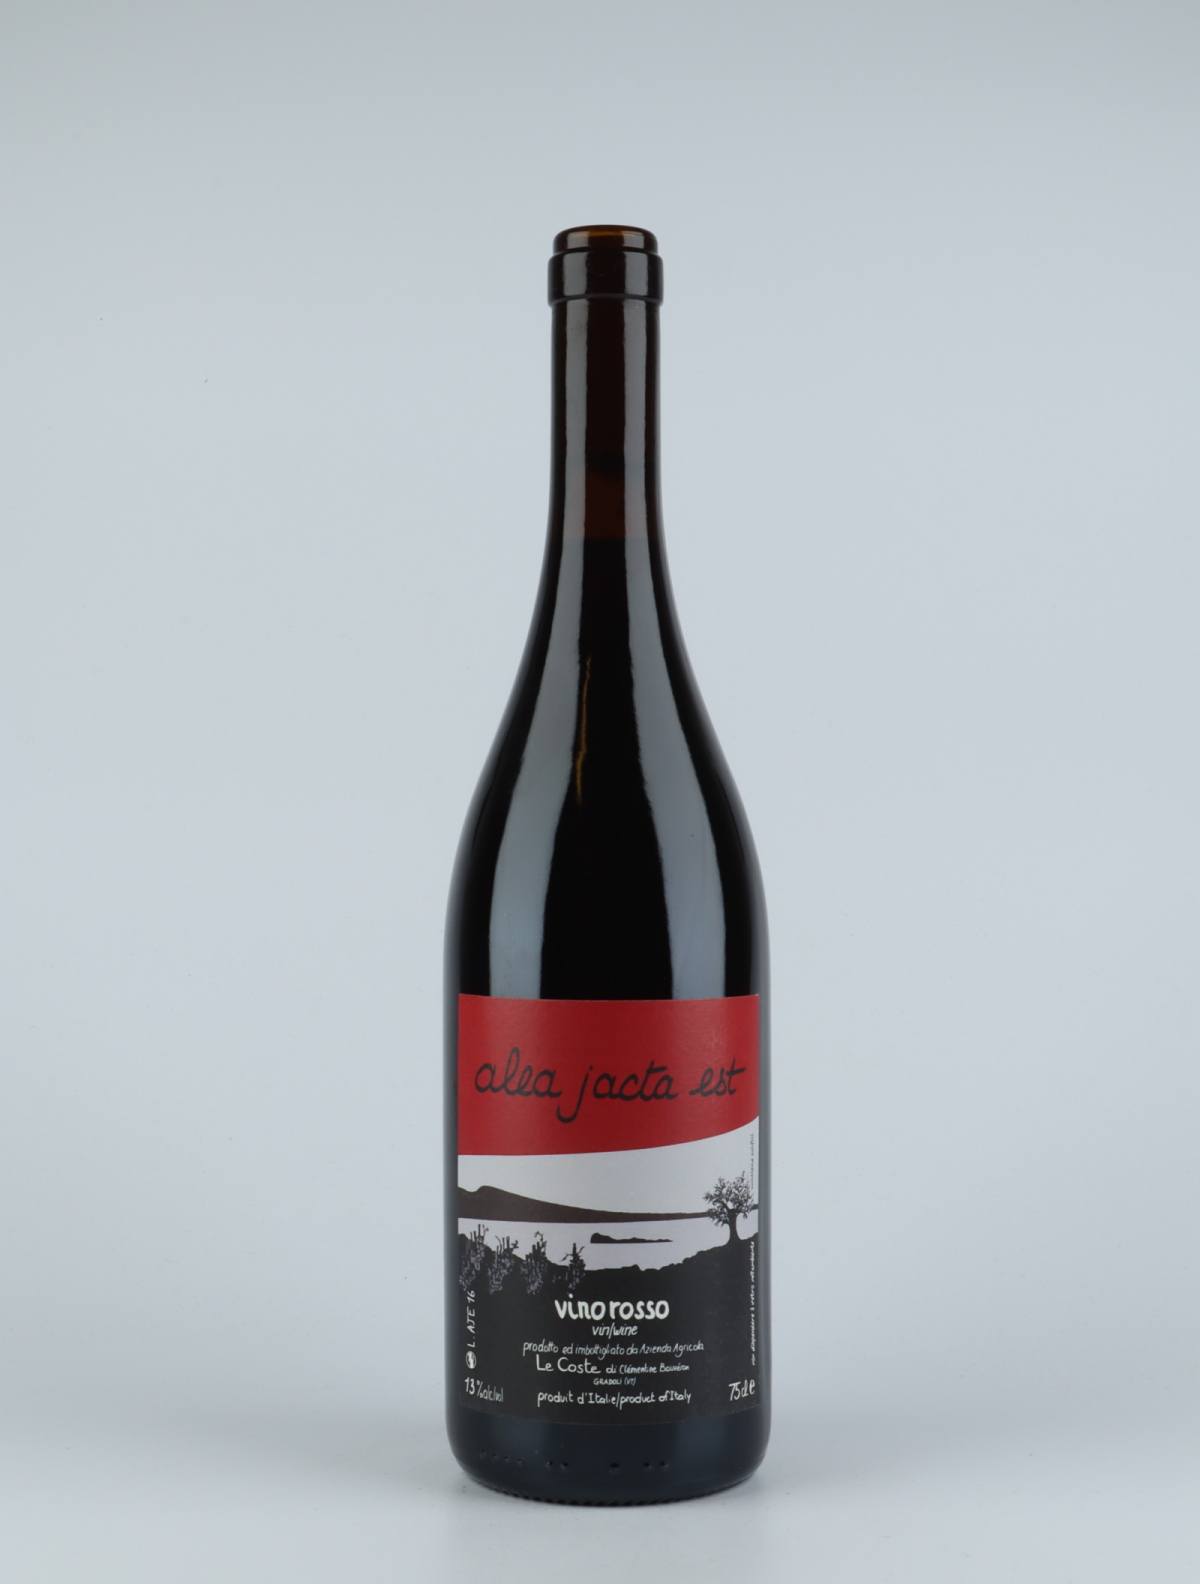 A bottle 2016 Alea Jacta Est Red wine from Le Coste, Lazio in Italy